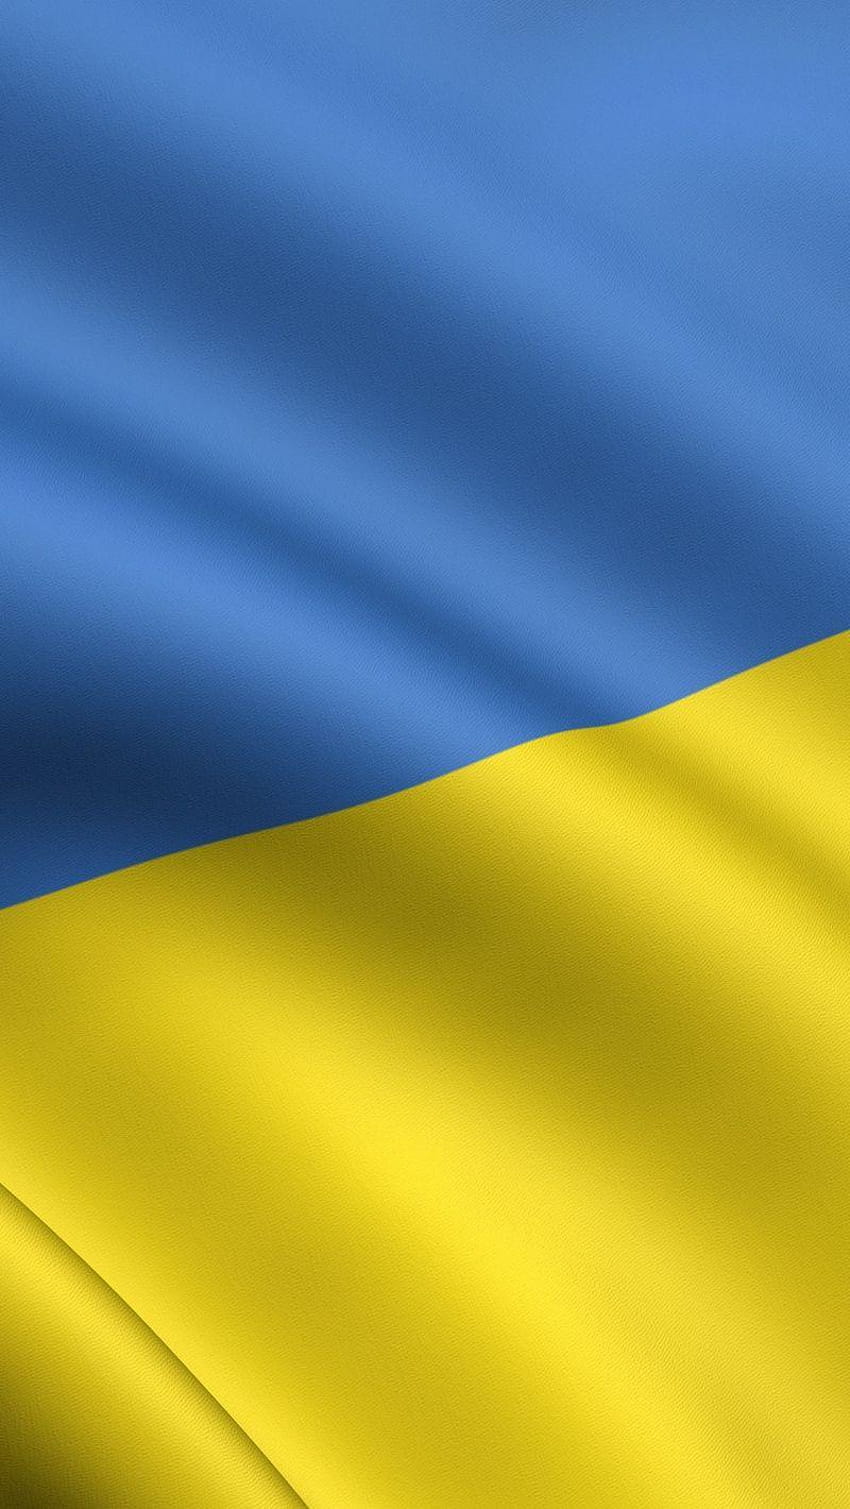 100 Ukraine Flag Background s  Wallpaperscom